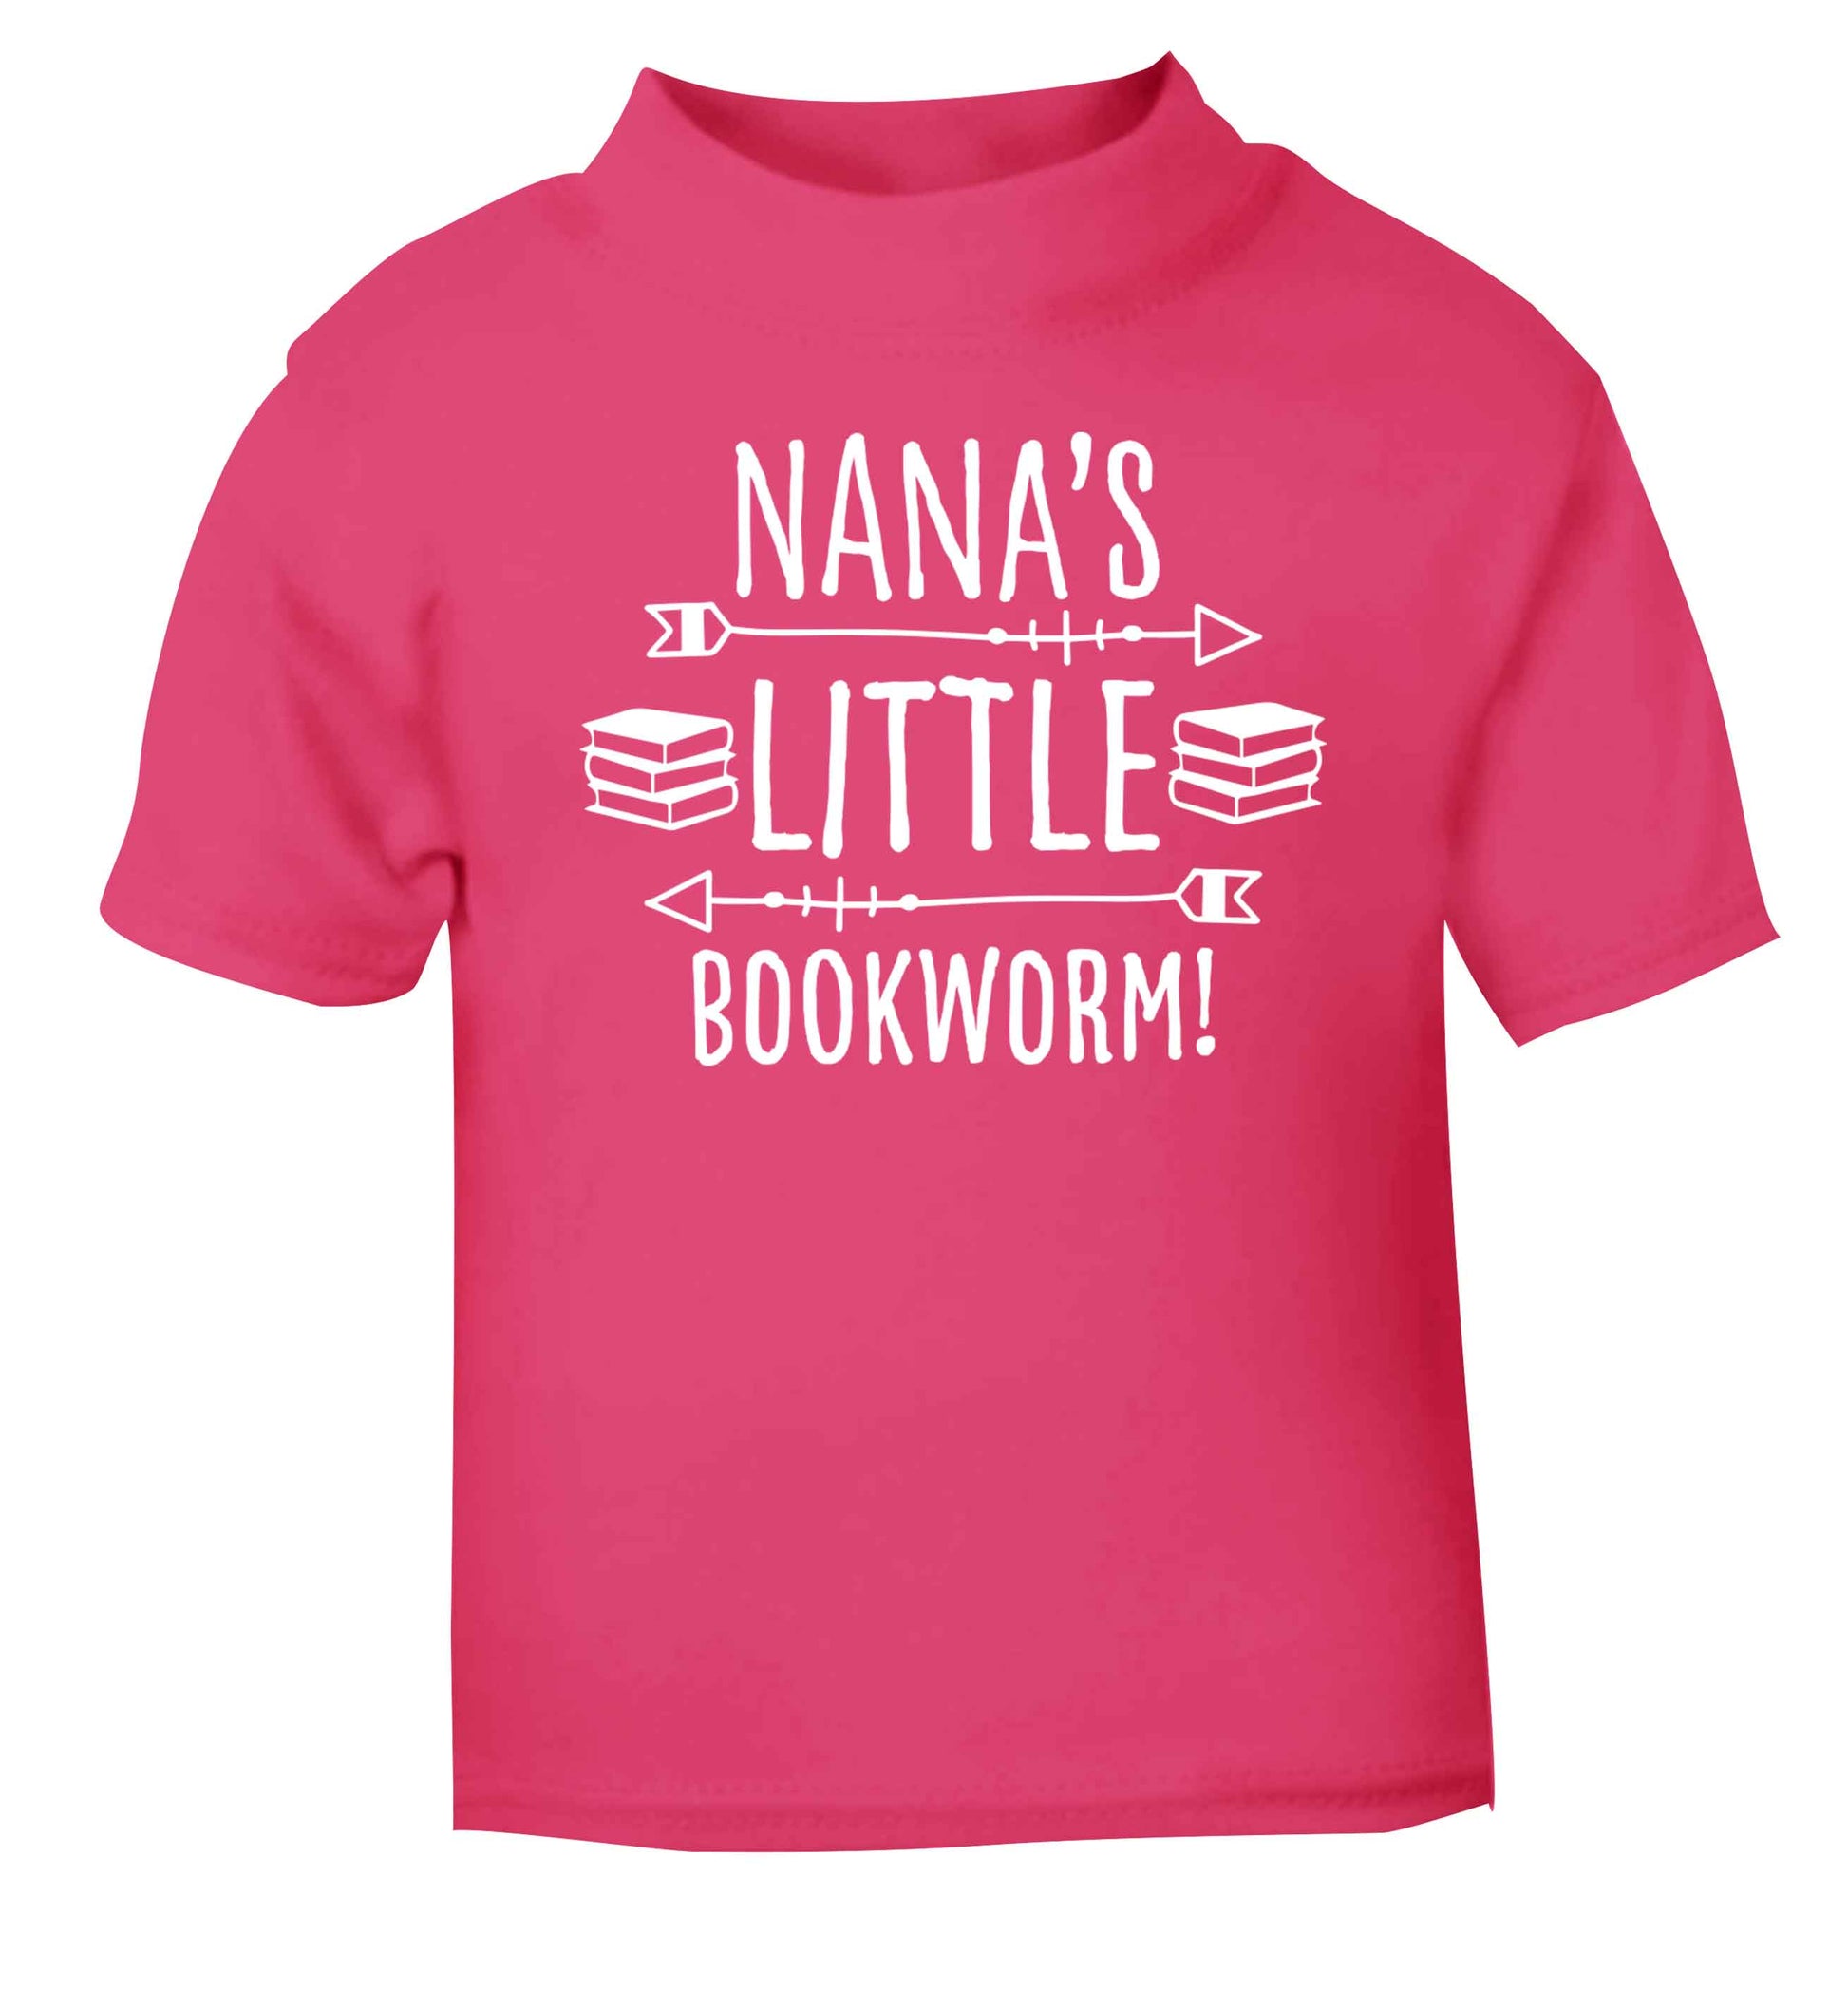 Grandad's little bookworm pink baby toddler Tshirt 2 Years